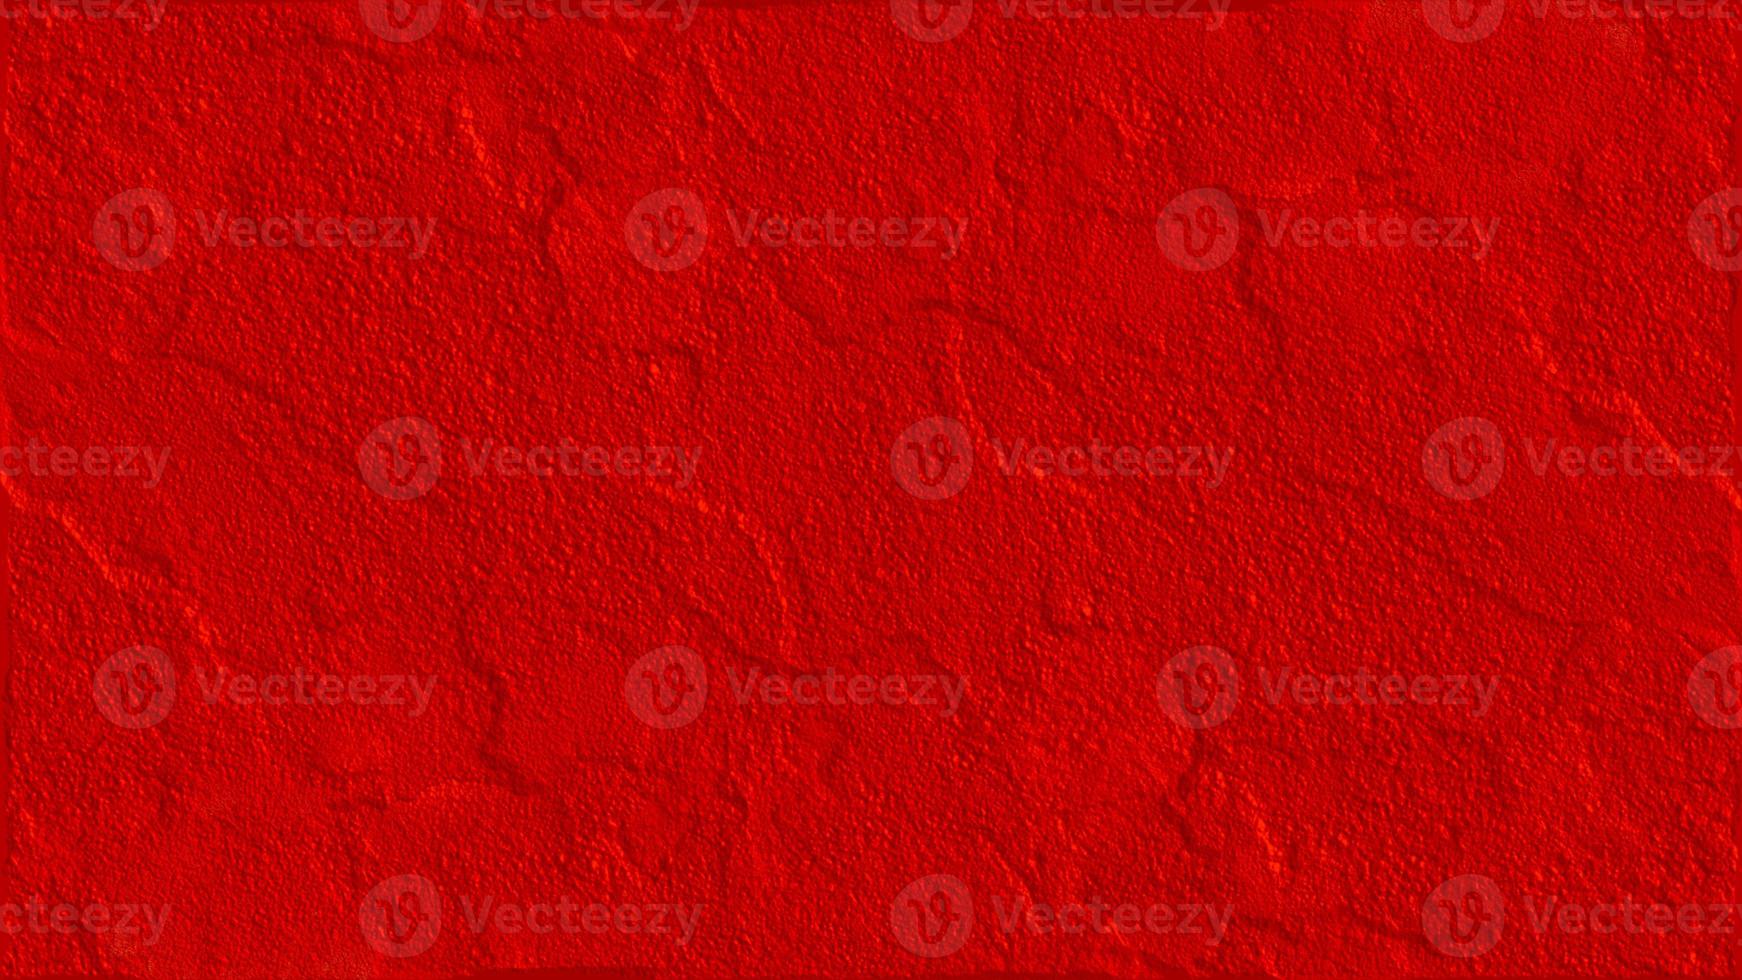 fondo de pared con textura de grunge rojo. hermoso estilista moderno fondo de textura roja con humo. Fondo de textura de papel viejo grunge rojo. grunge acuarela foto